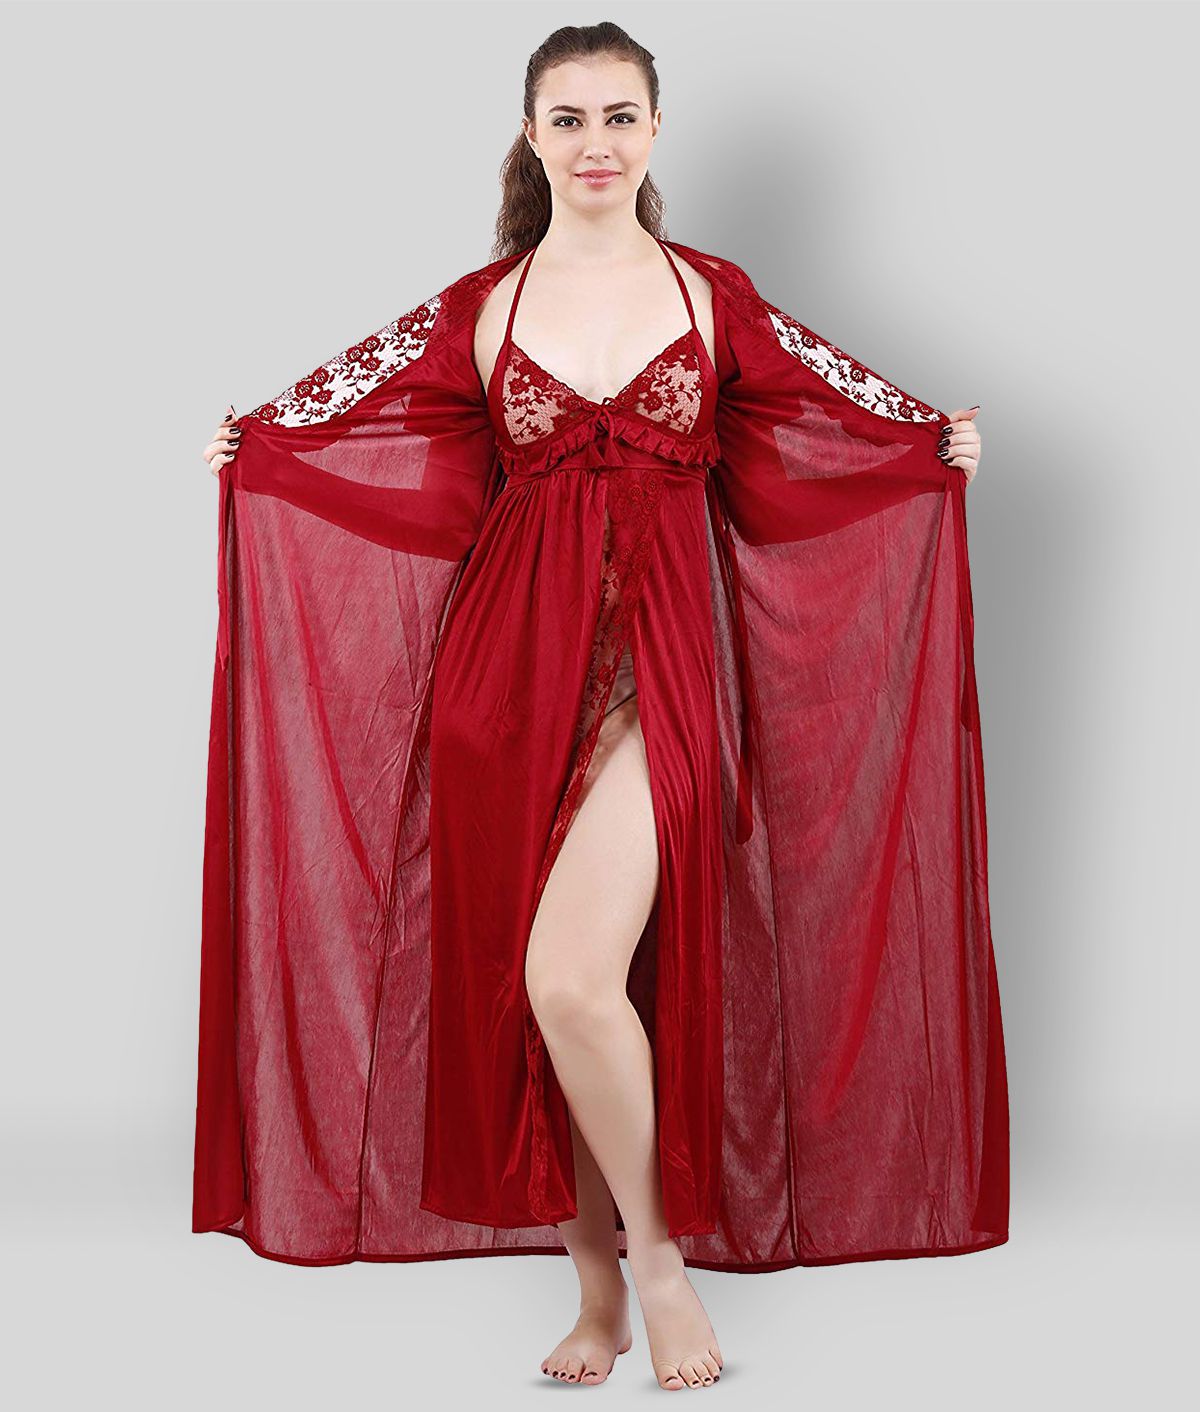 Apratim - Red Satin Women's Nightwear Nighty & Night Gowns